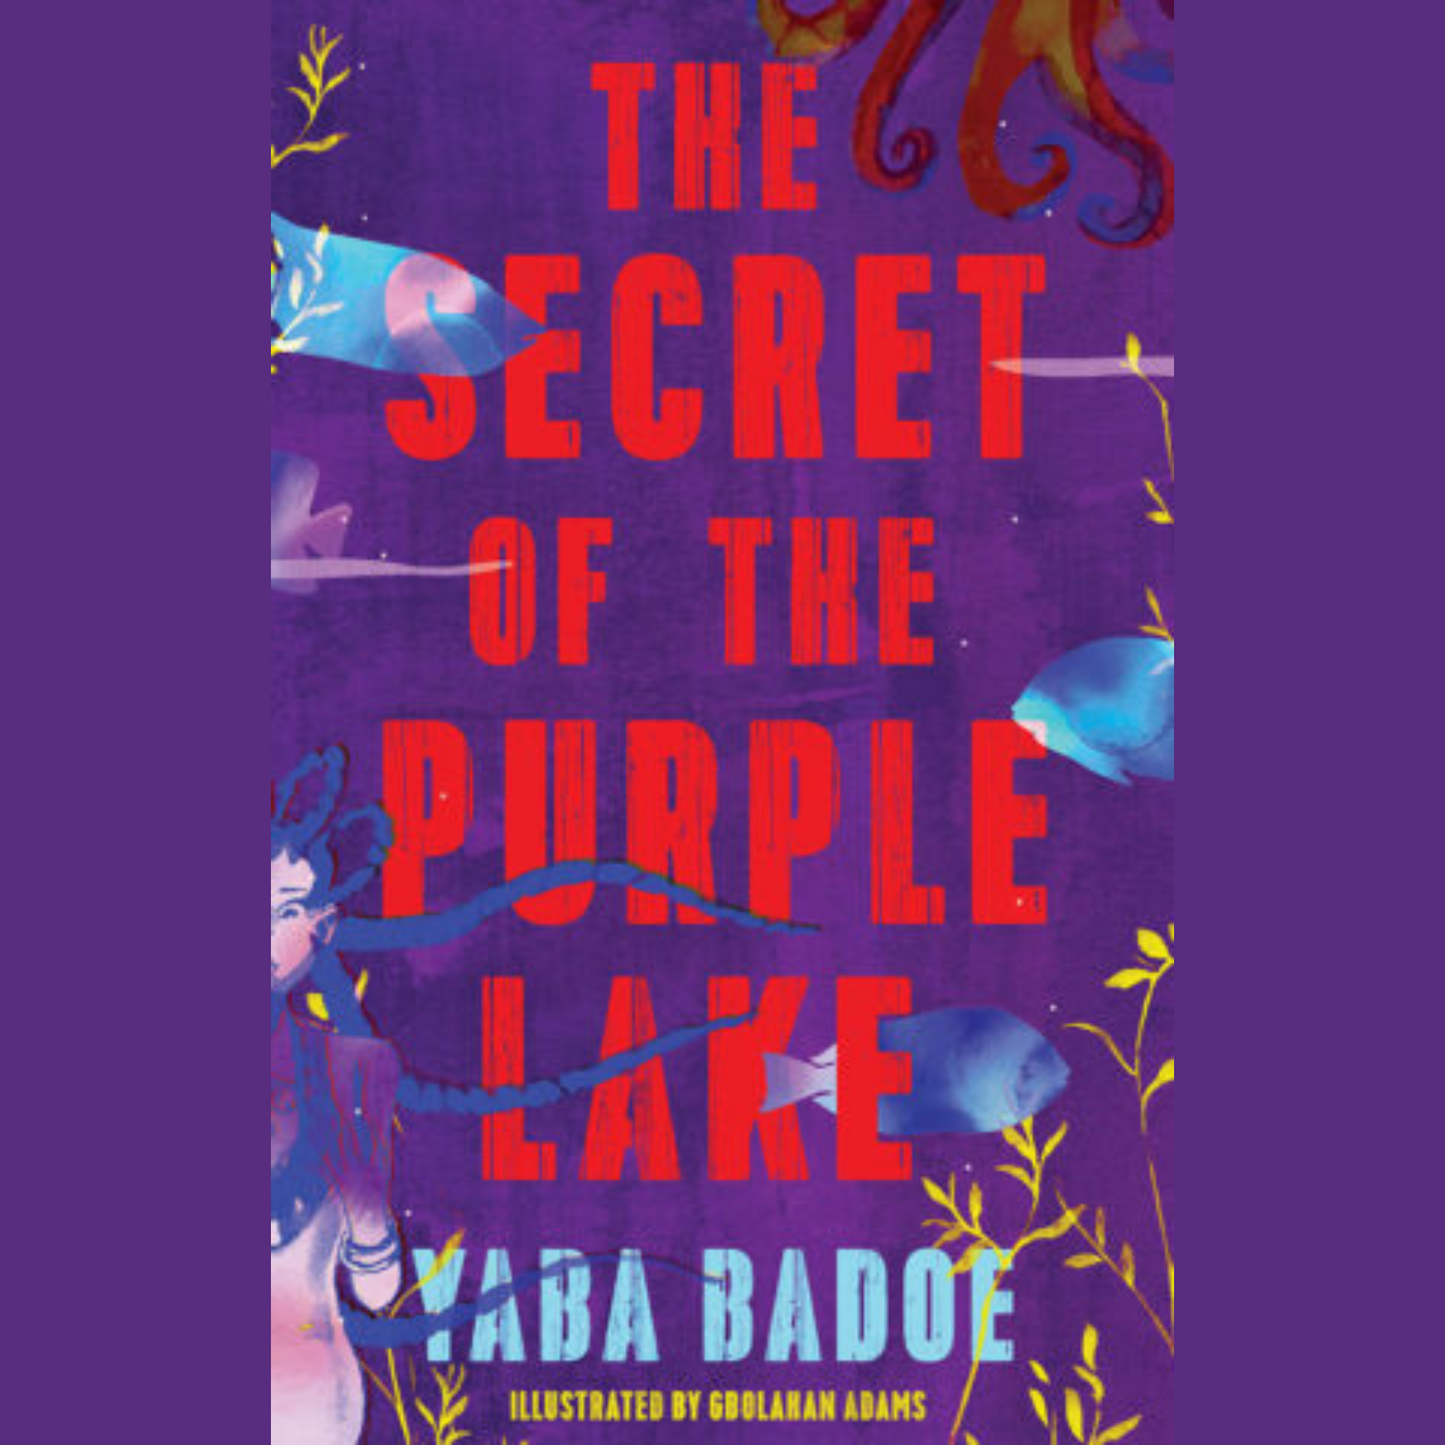 The secret of the purple lake